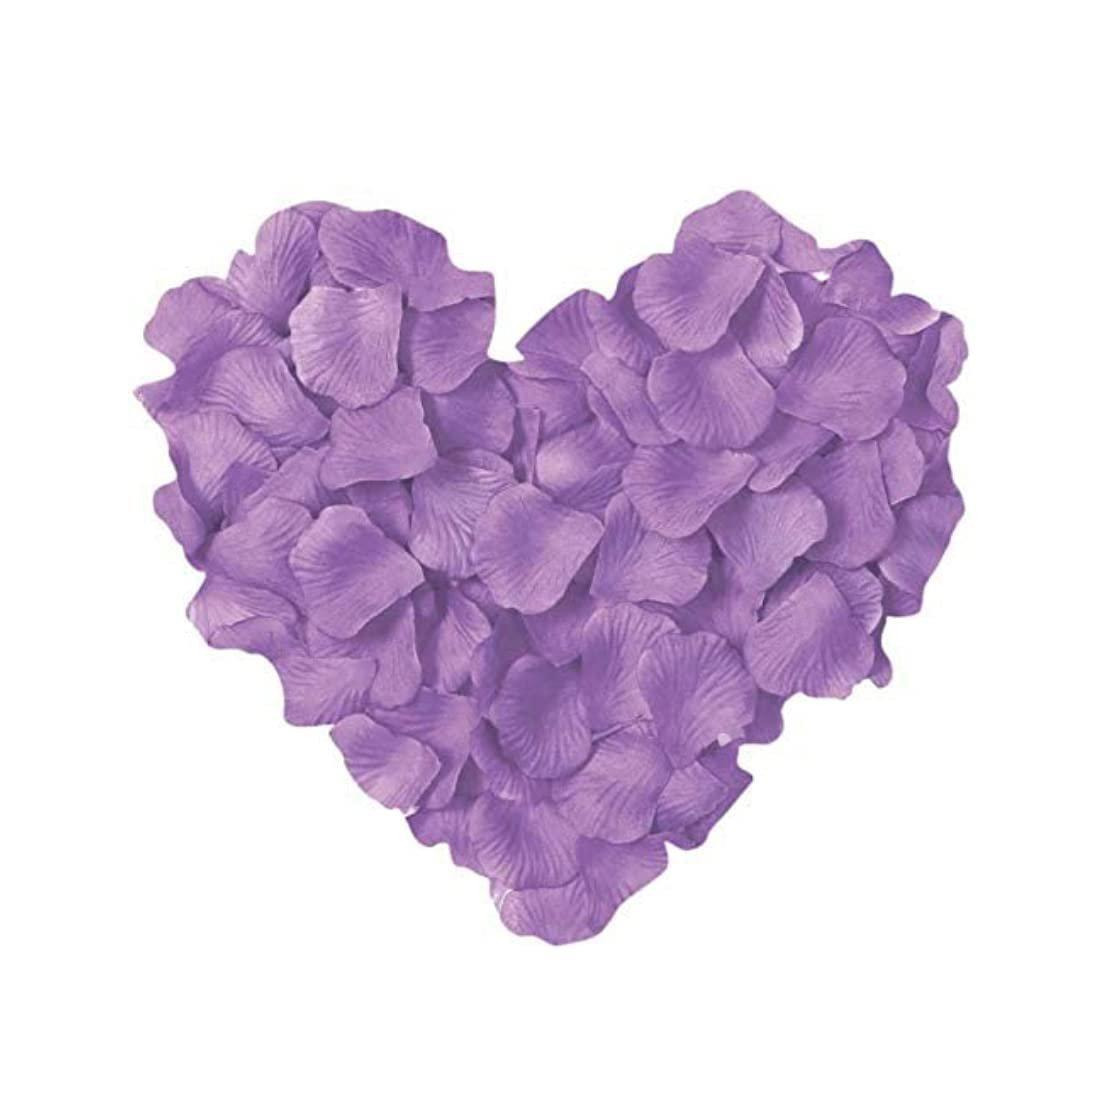 1000pcs Light Purple Silk Rose Petals Wedding Mothers Day Wedding Confetti Anniversary Table Decorations - image 1